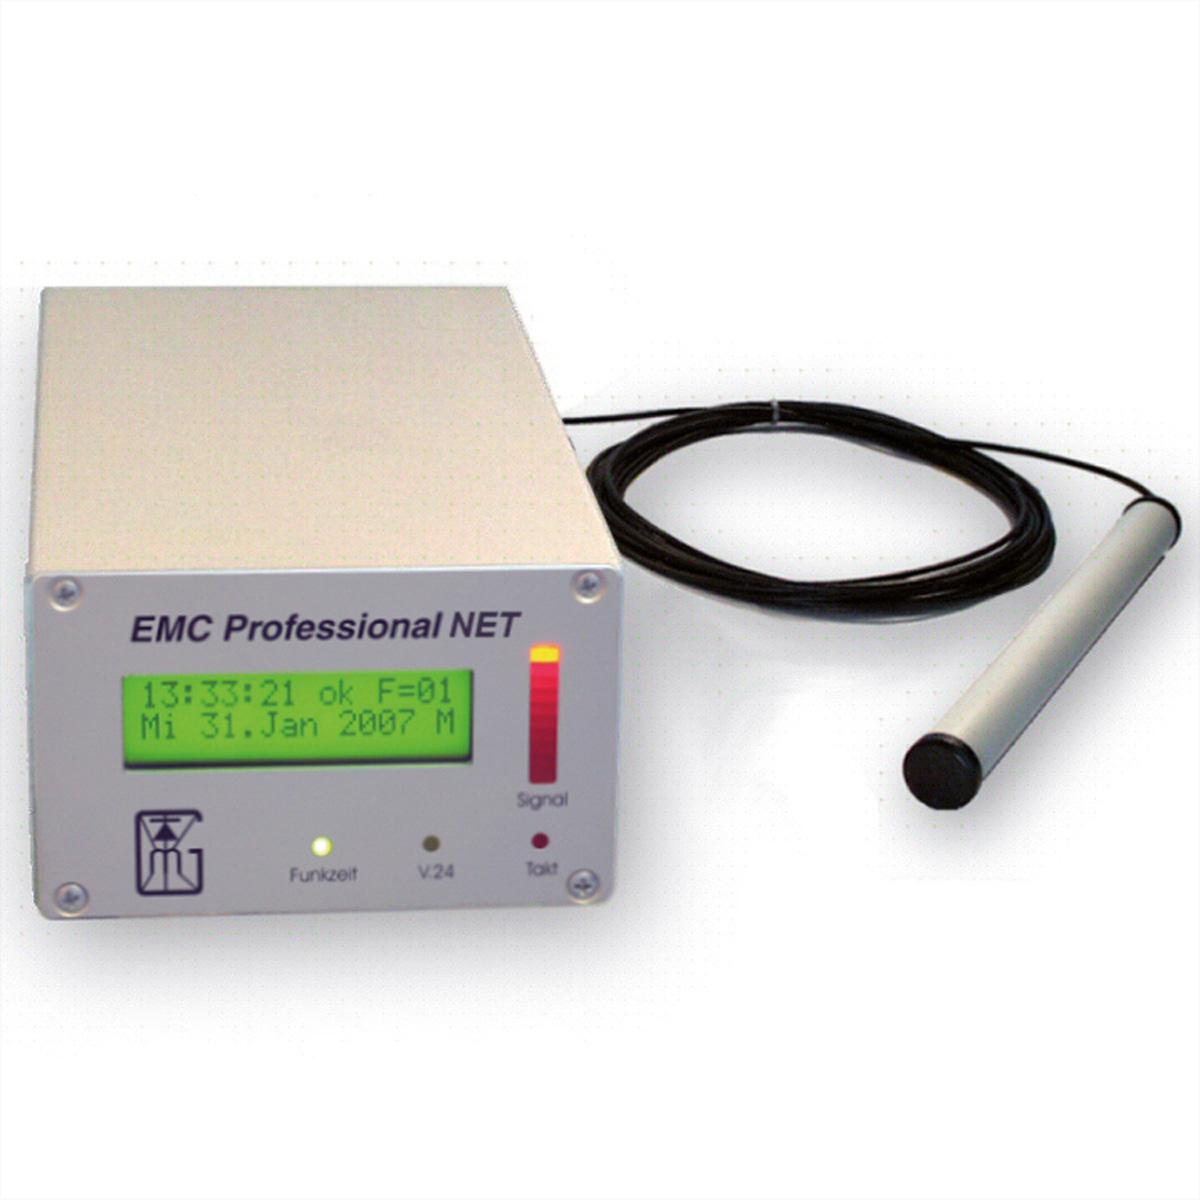 GUDE 3001 EMC Professional Zeitserver, integrierte Funkuhr, ext. Antenne, Tower